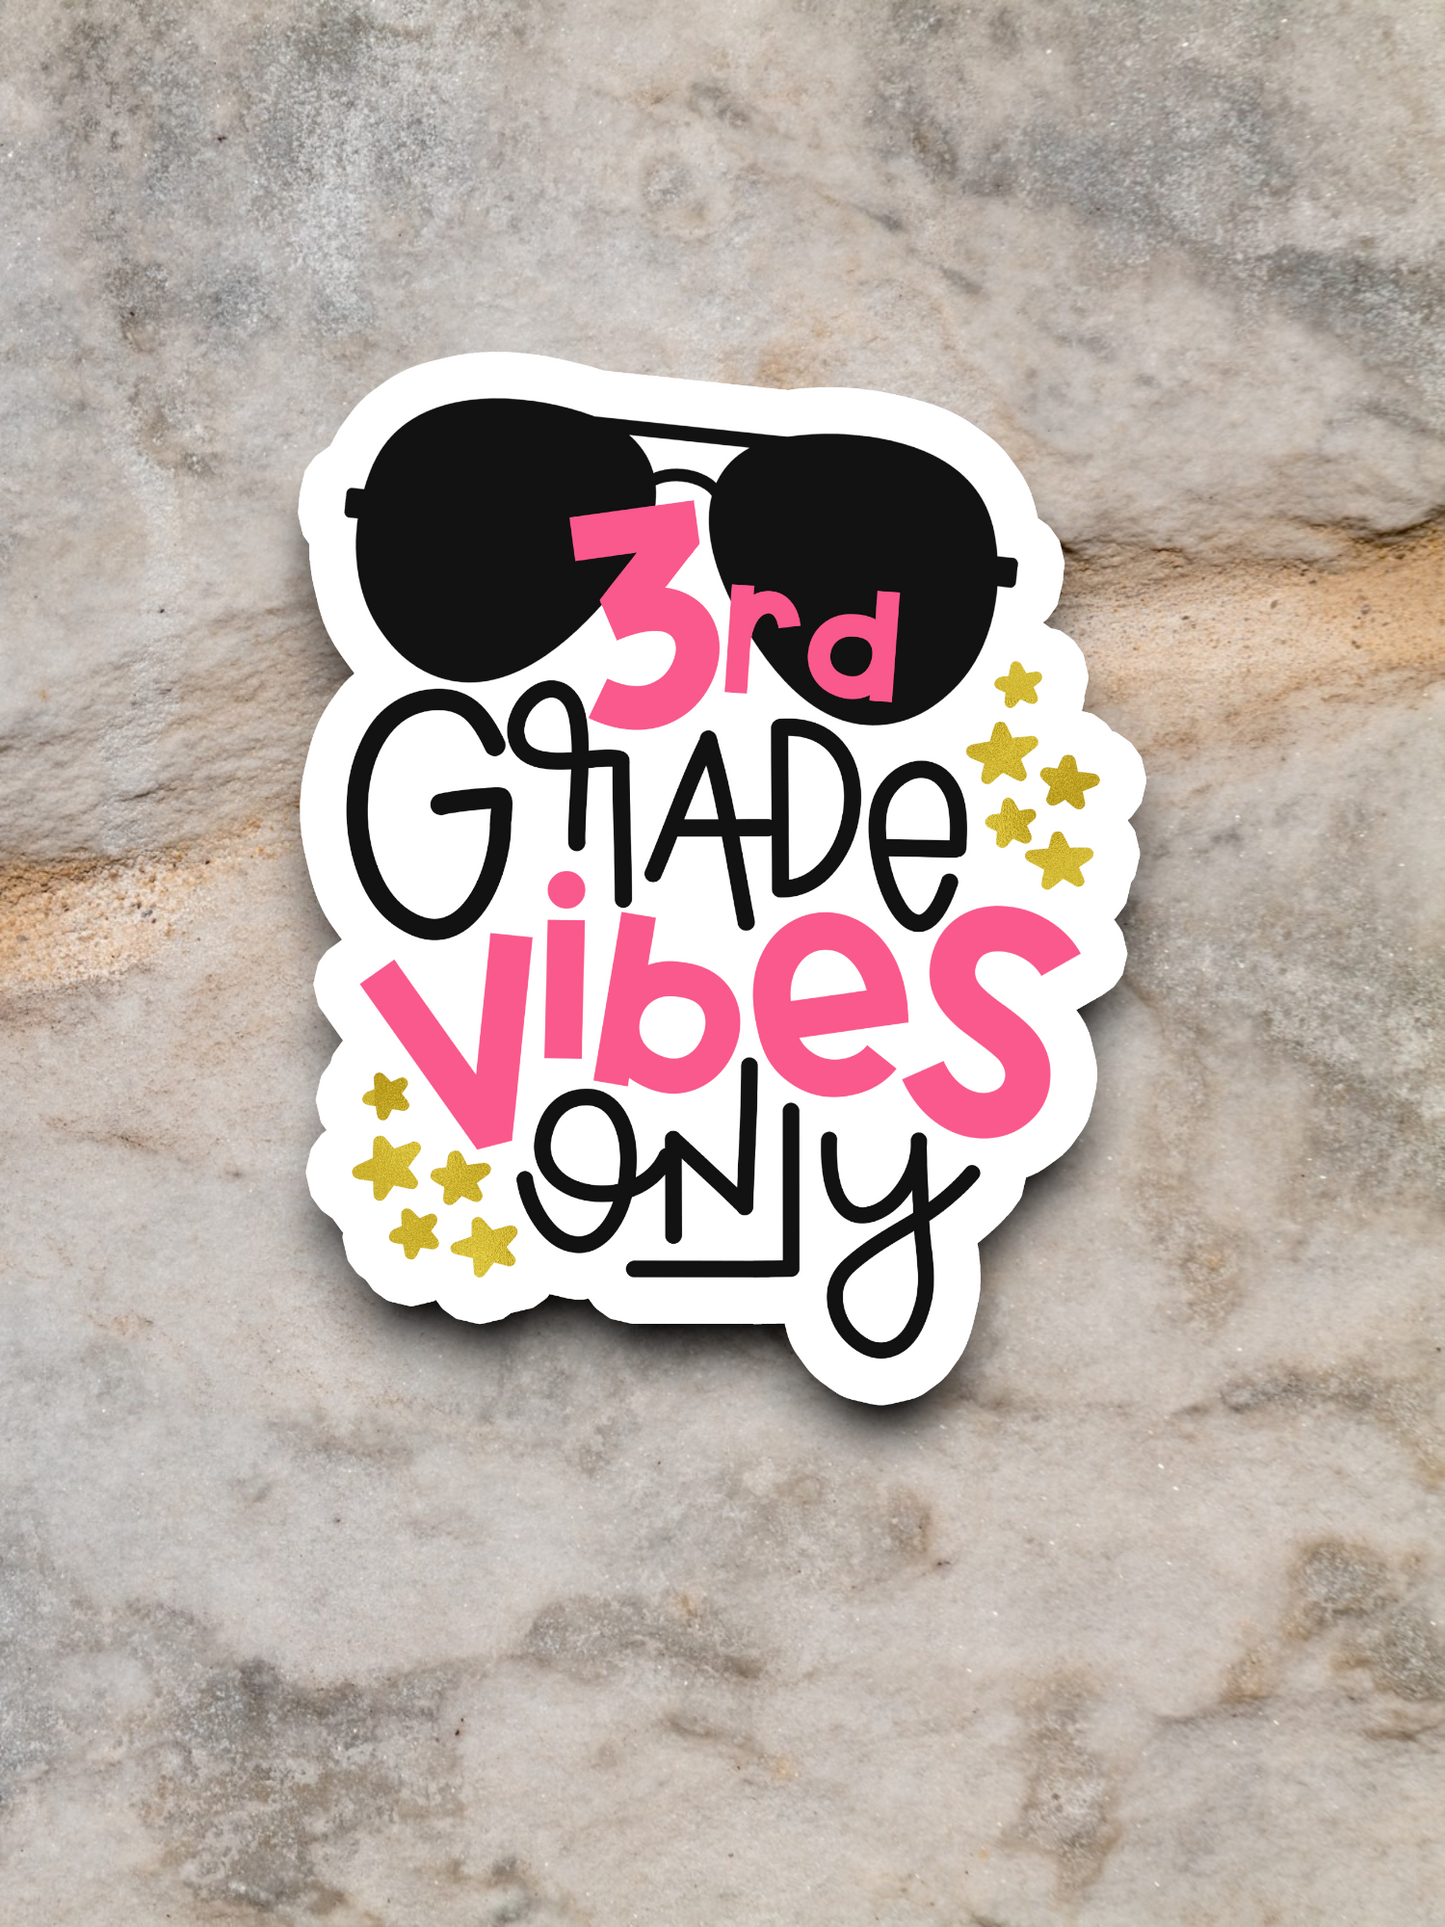 3rd Grade Vibes Only - School Sticker